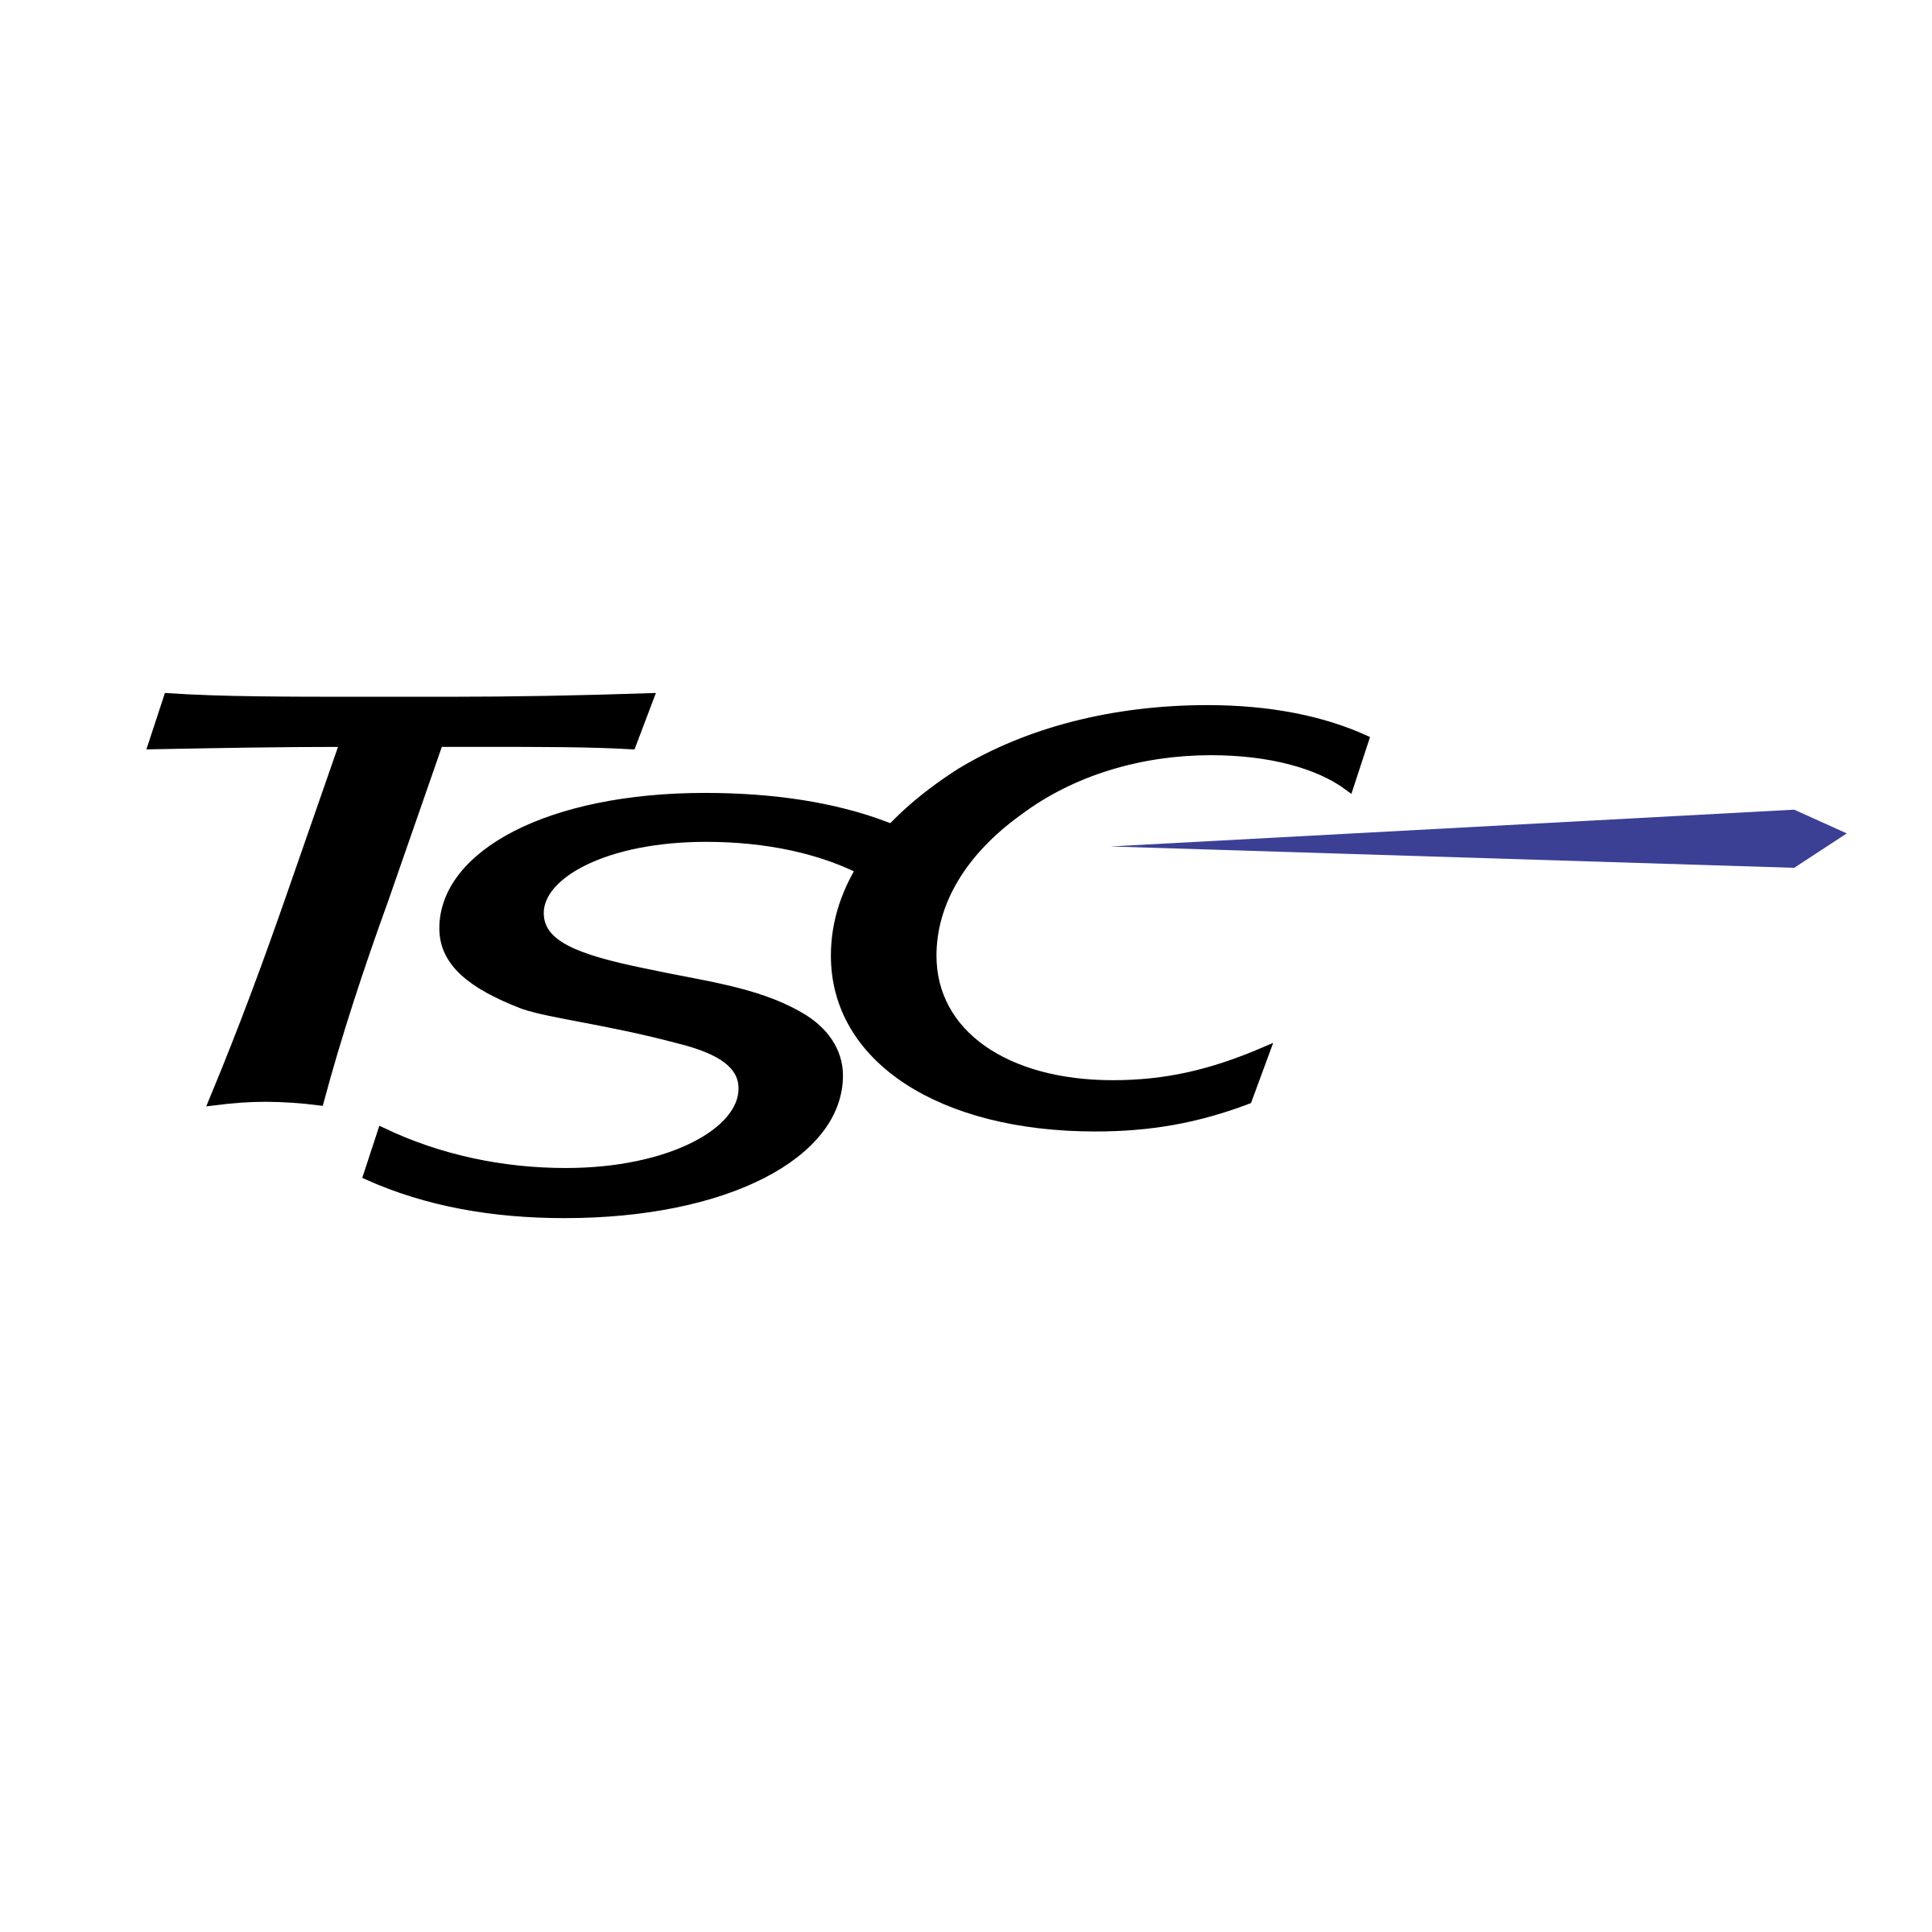 TSC Logo - TSC Logo PNG Transparent & SVG Vector